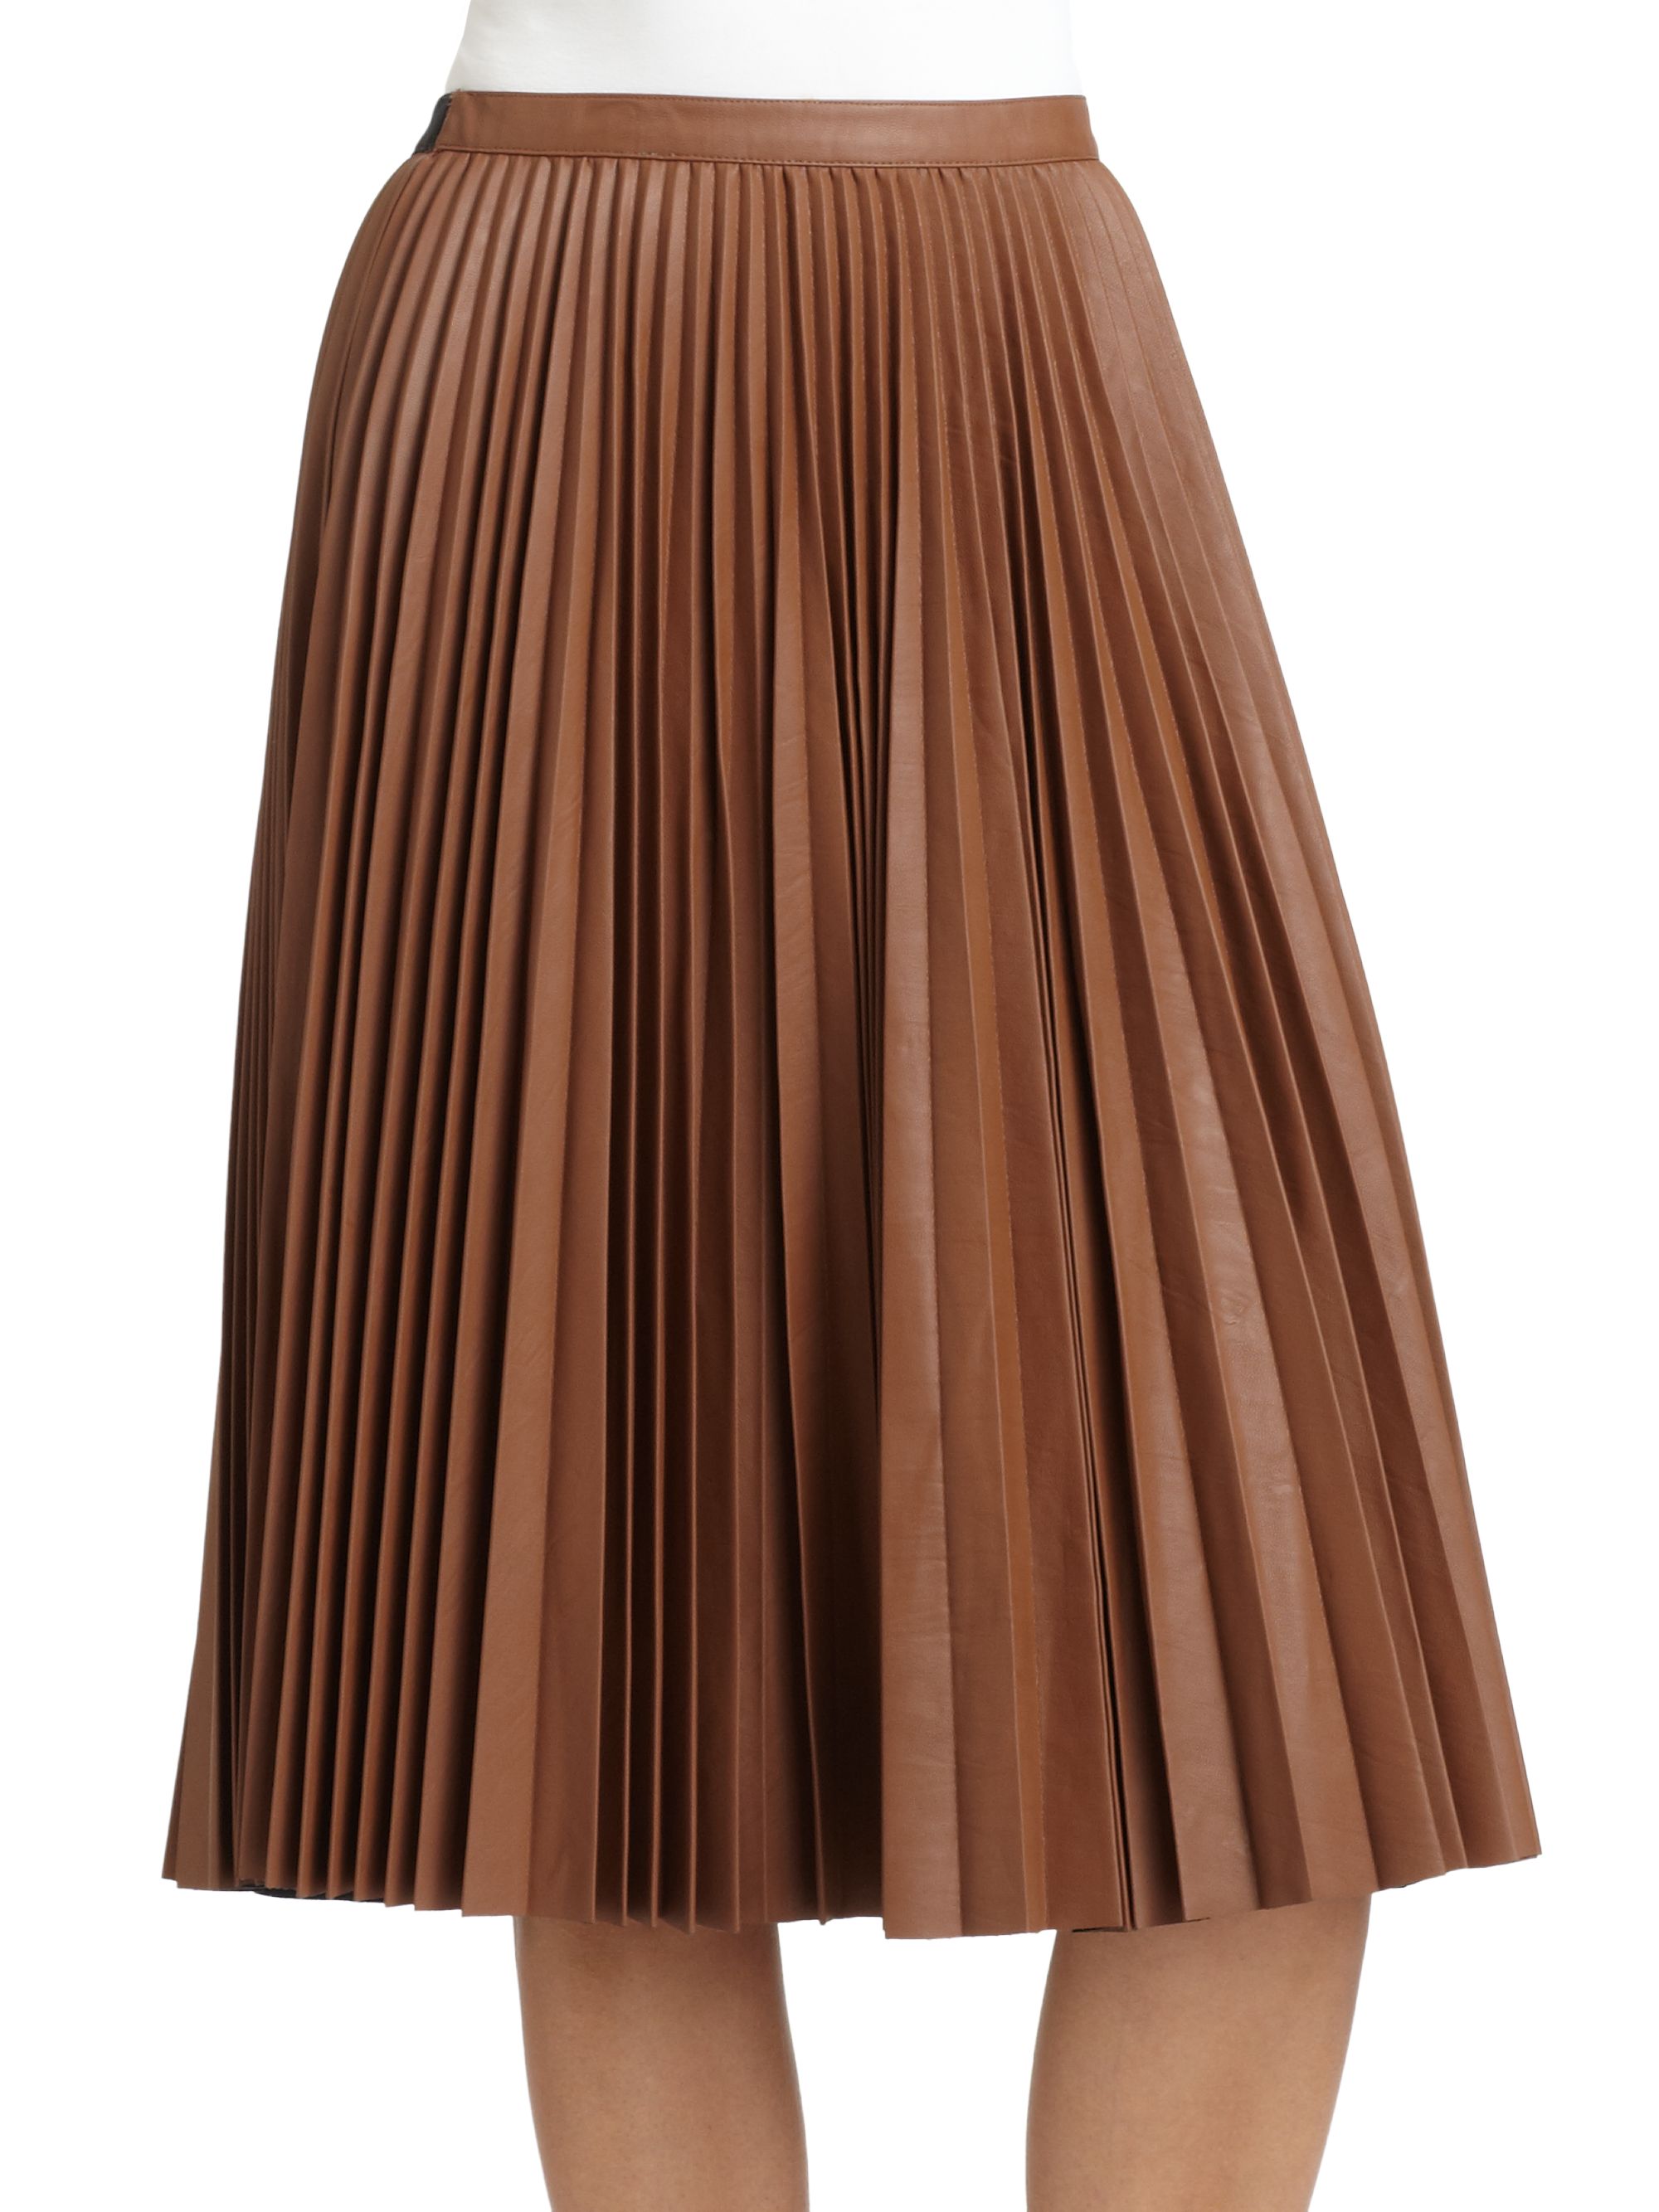 Bcbgmaxazria Elisa Pleated Skirt in Brown (toffee) | Lyst